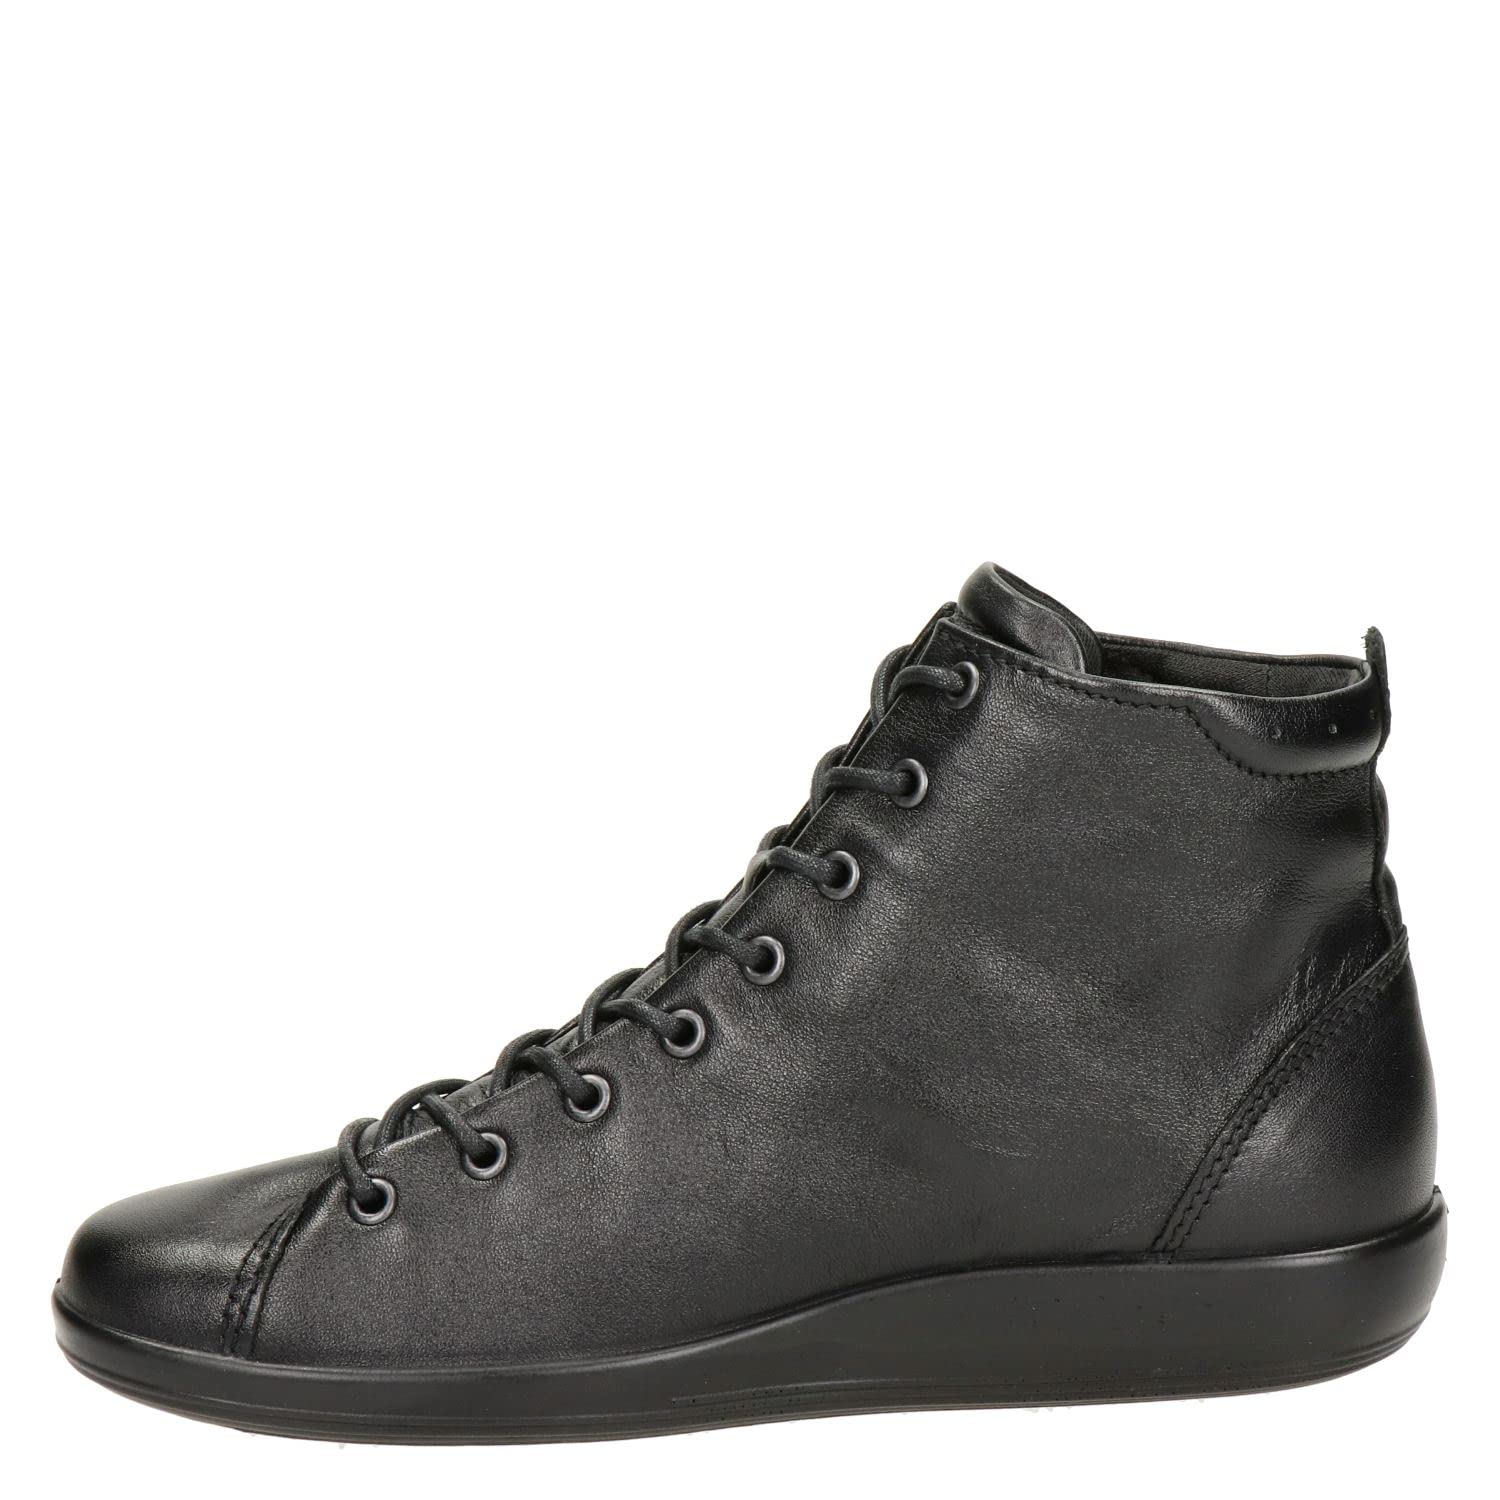 Ecco Damen Soft 2.0 Chelsea Boots, Schwarz (Black with Black Sole56723), 37 EU